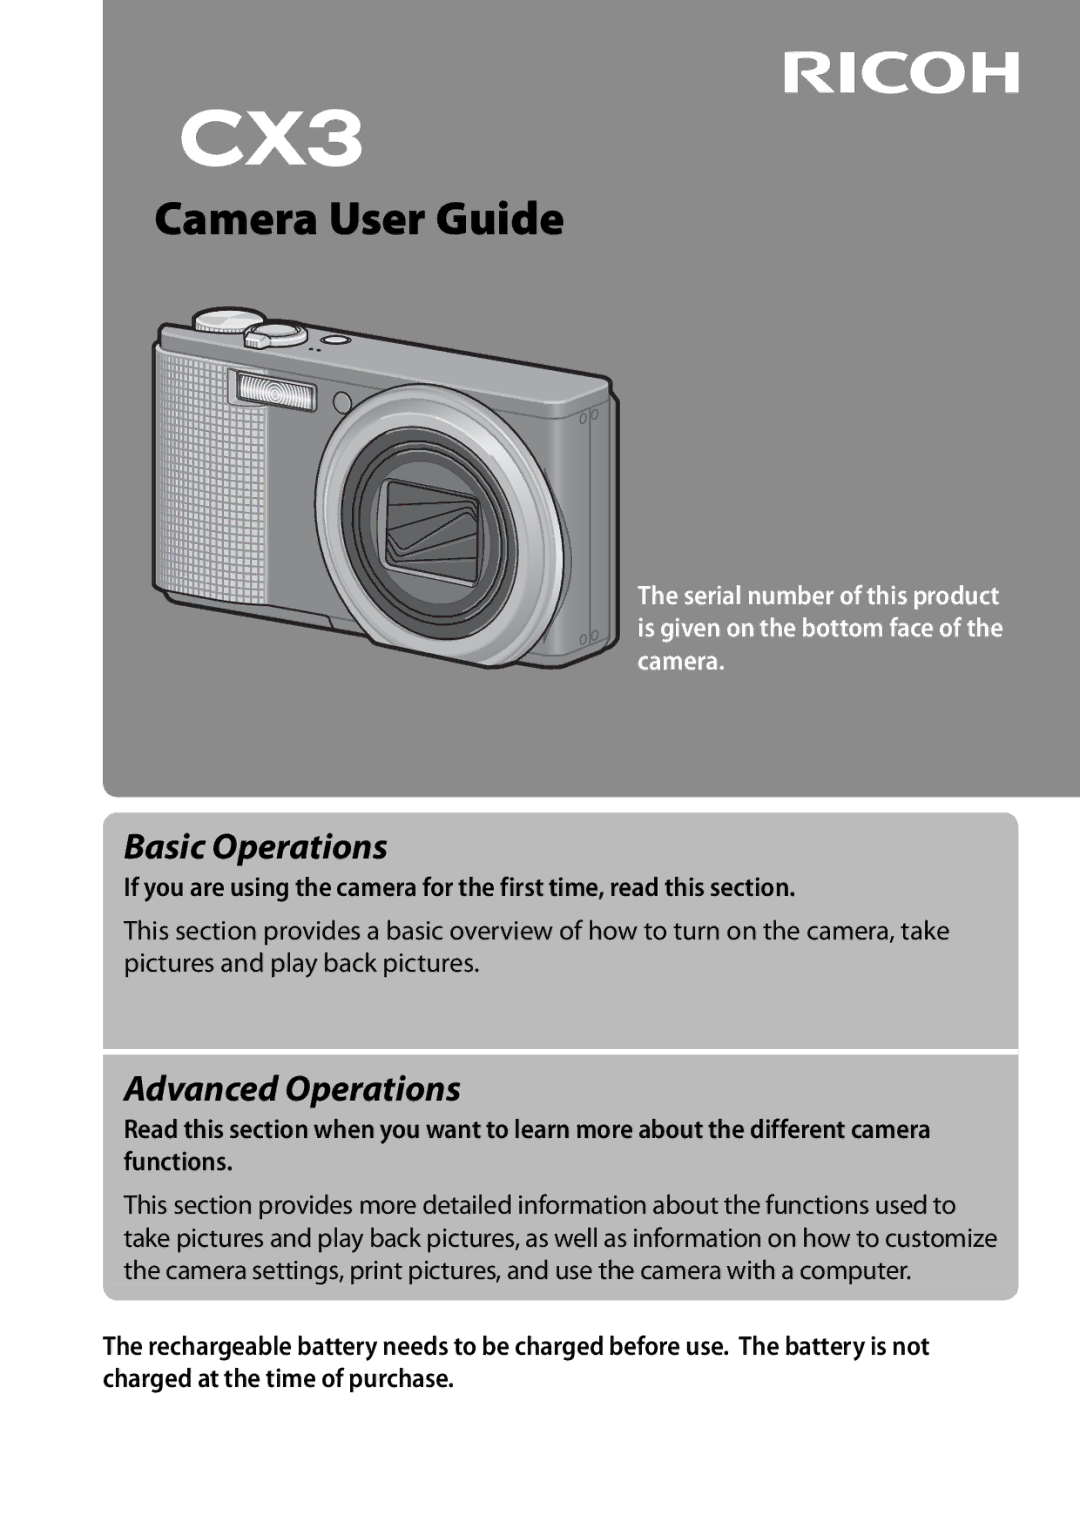 Ricoh CX3 manual Camera User Guide 